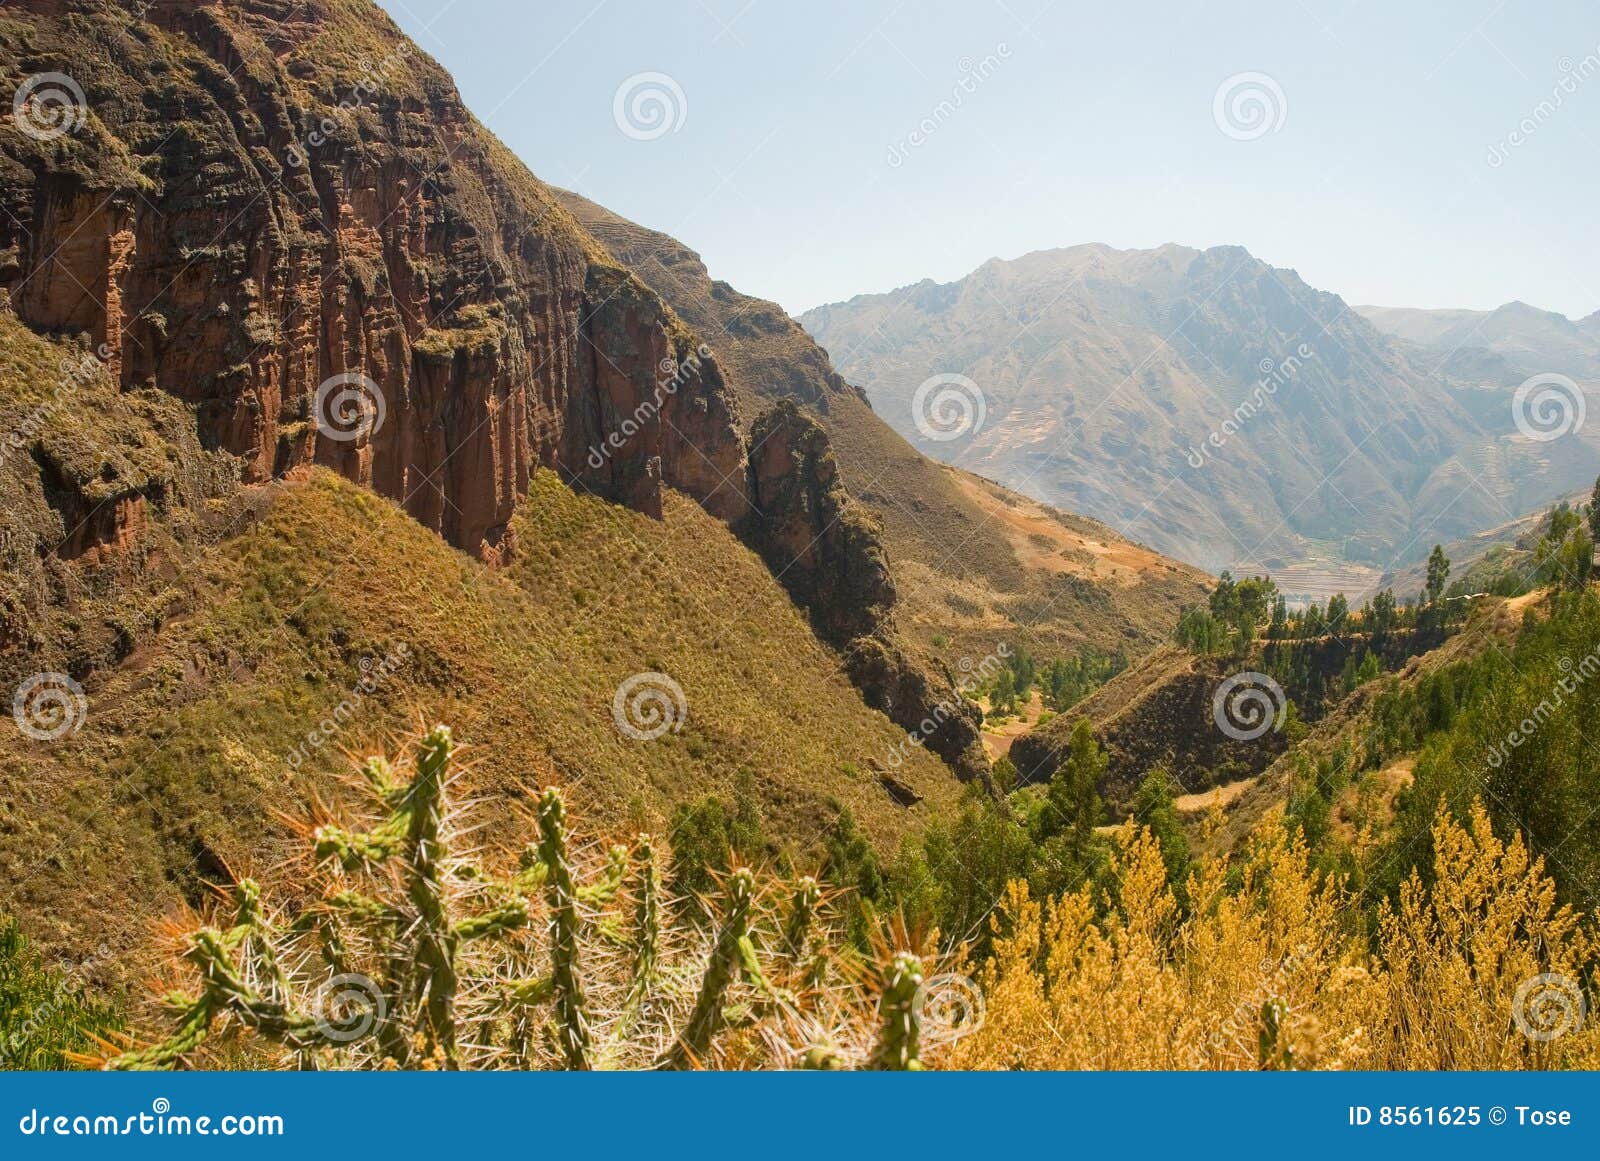 landscape near the urubamba valley, cusco, peru